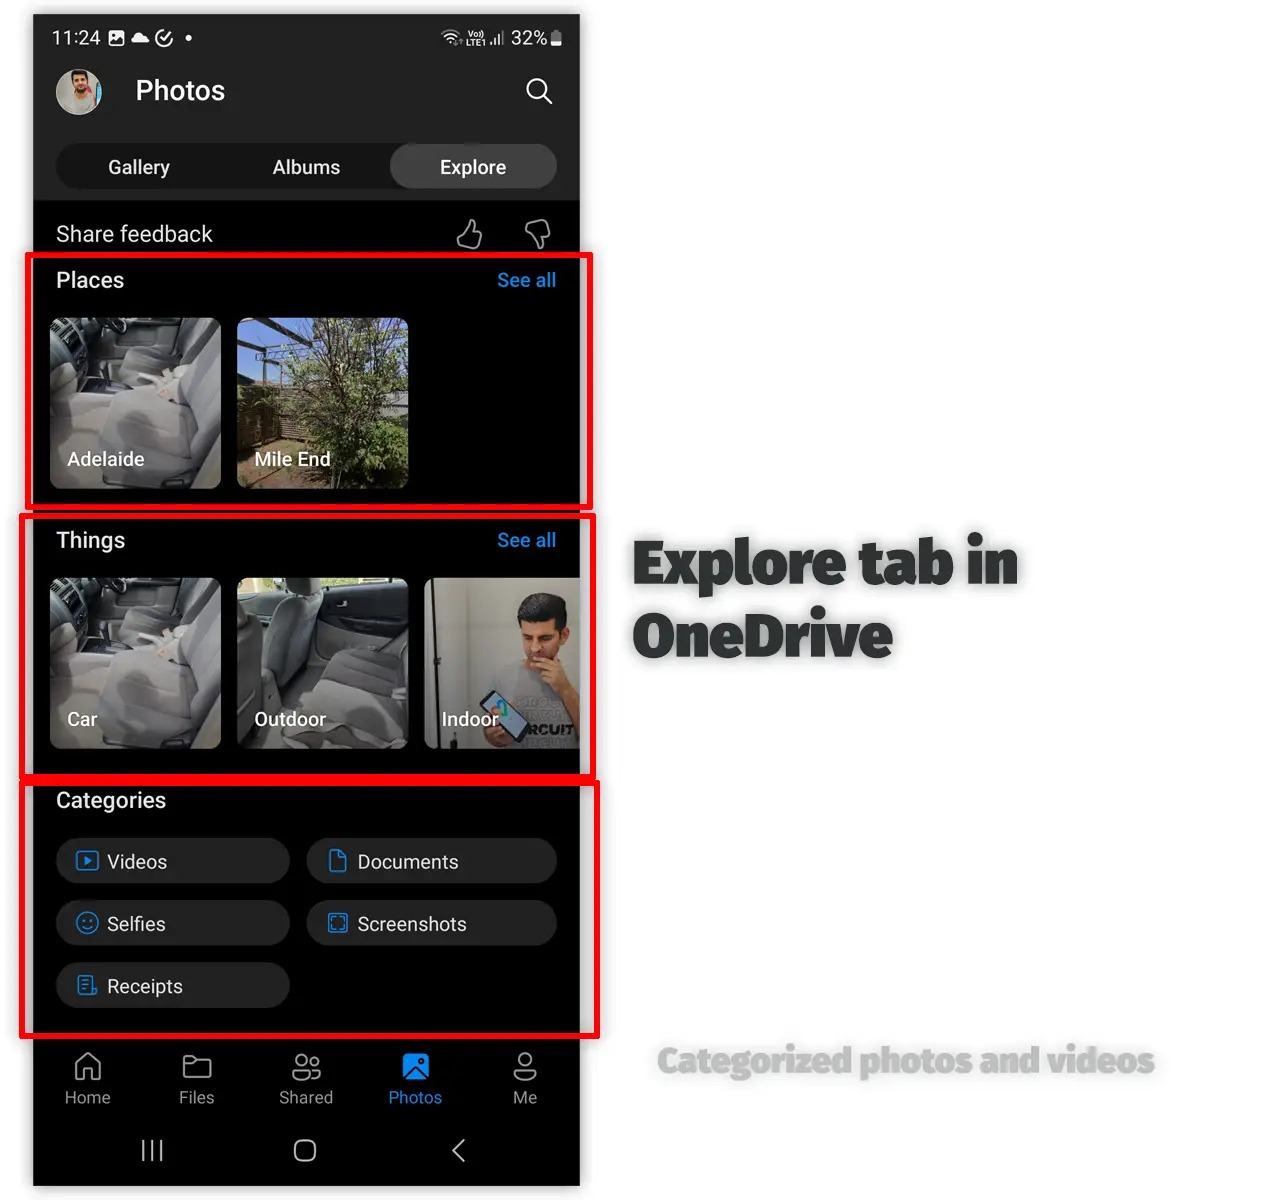 Explore tab in OneDrive